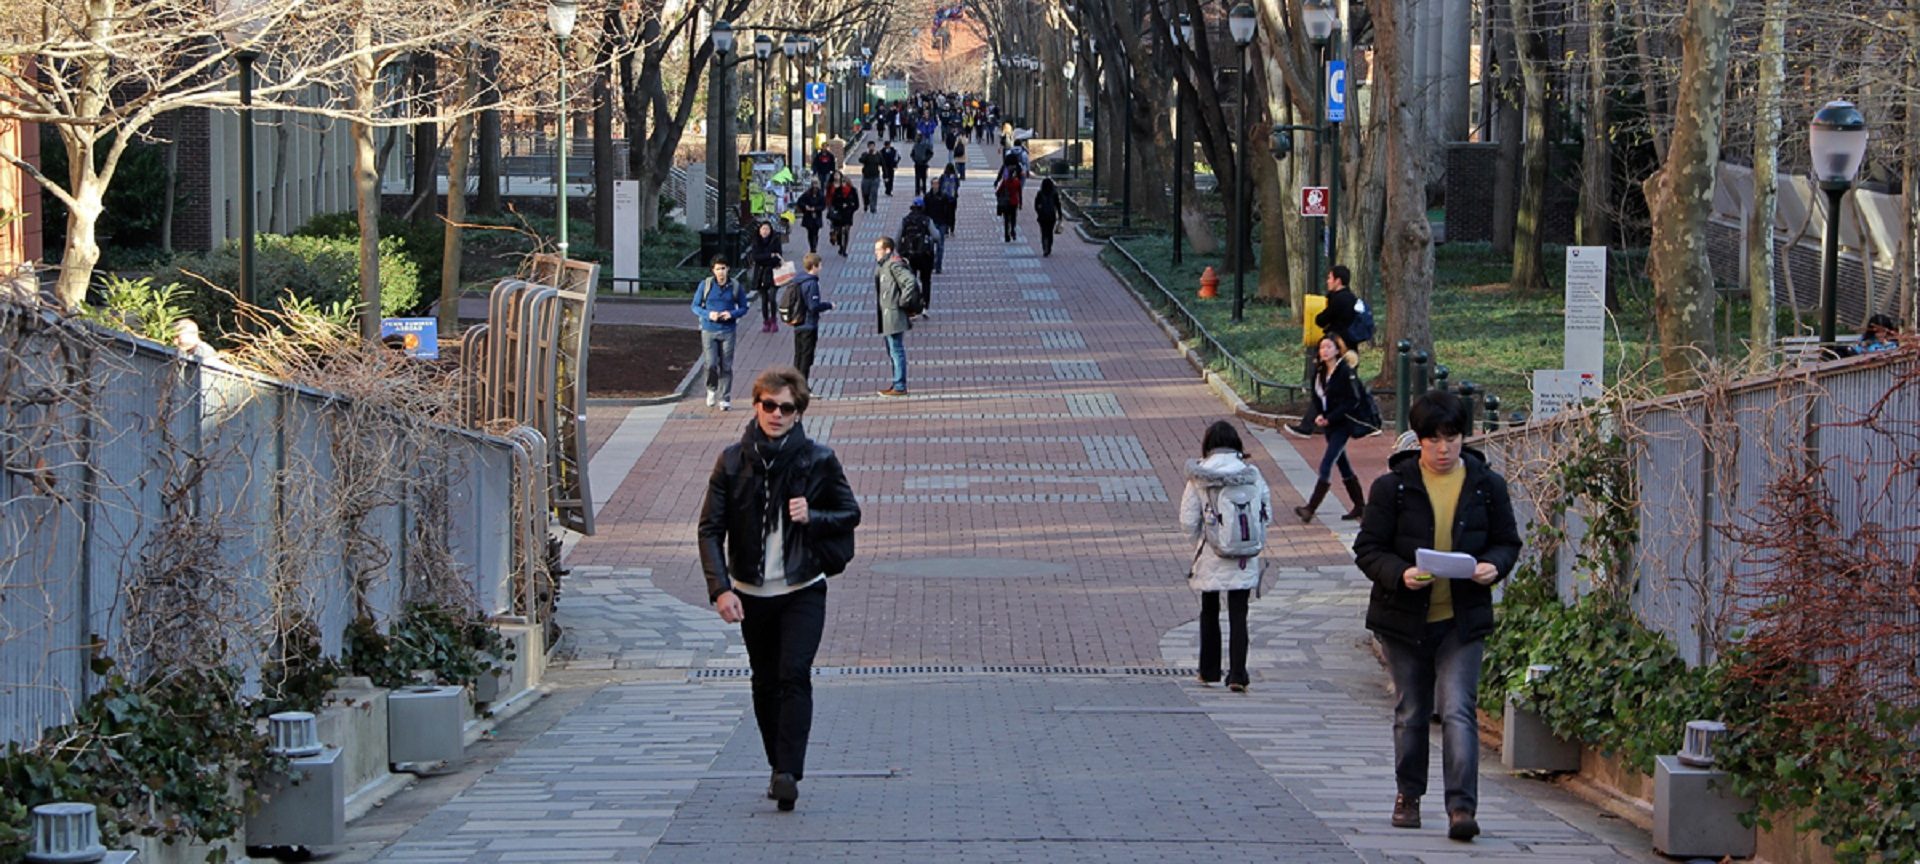 FILE PHOTO: People walk along Locust Walk on the University of Pennsylvania campus in West Philadelphia.